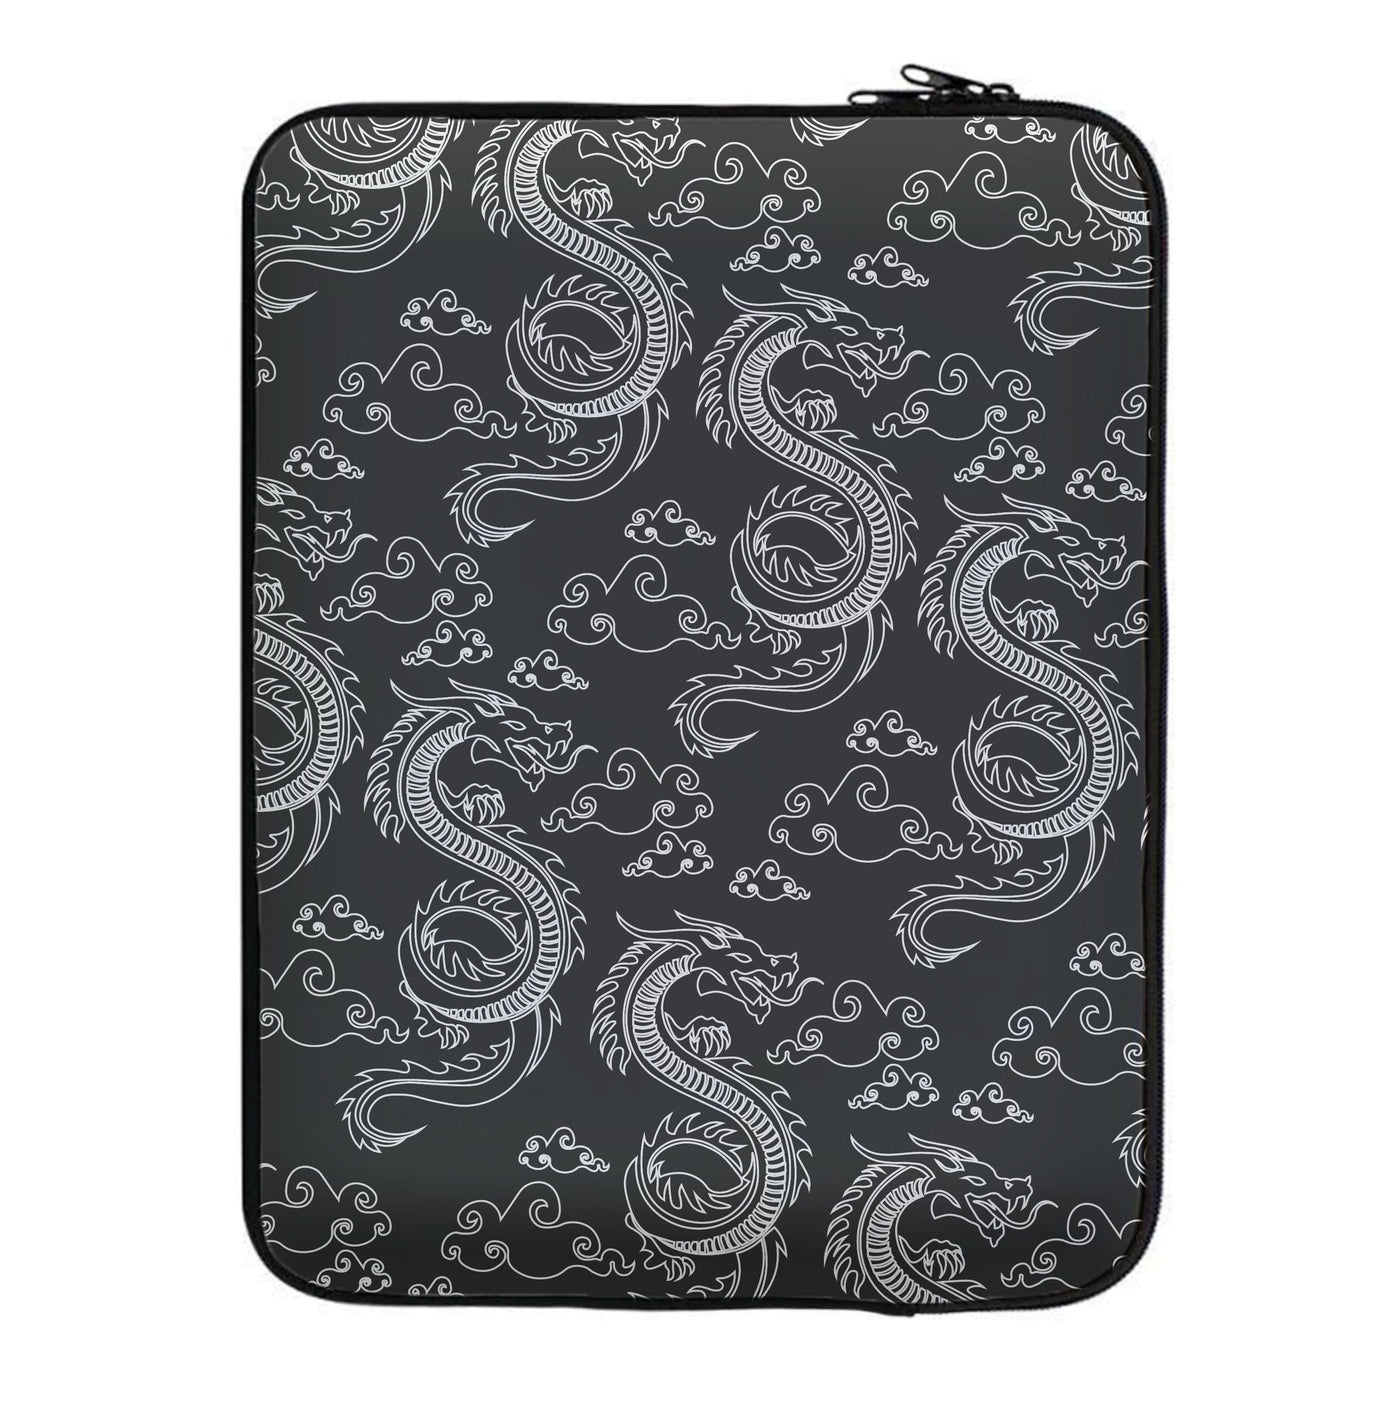 Black And White Dragon Pattern Laptop Sleeve